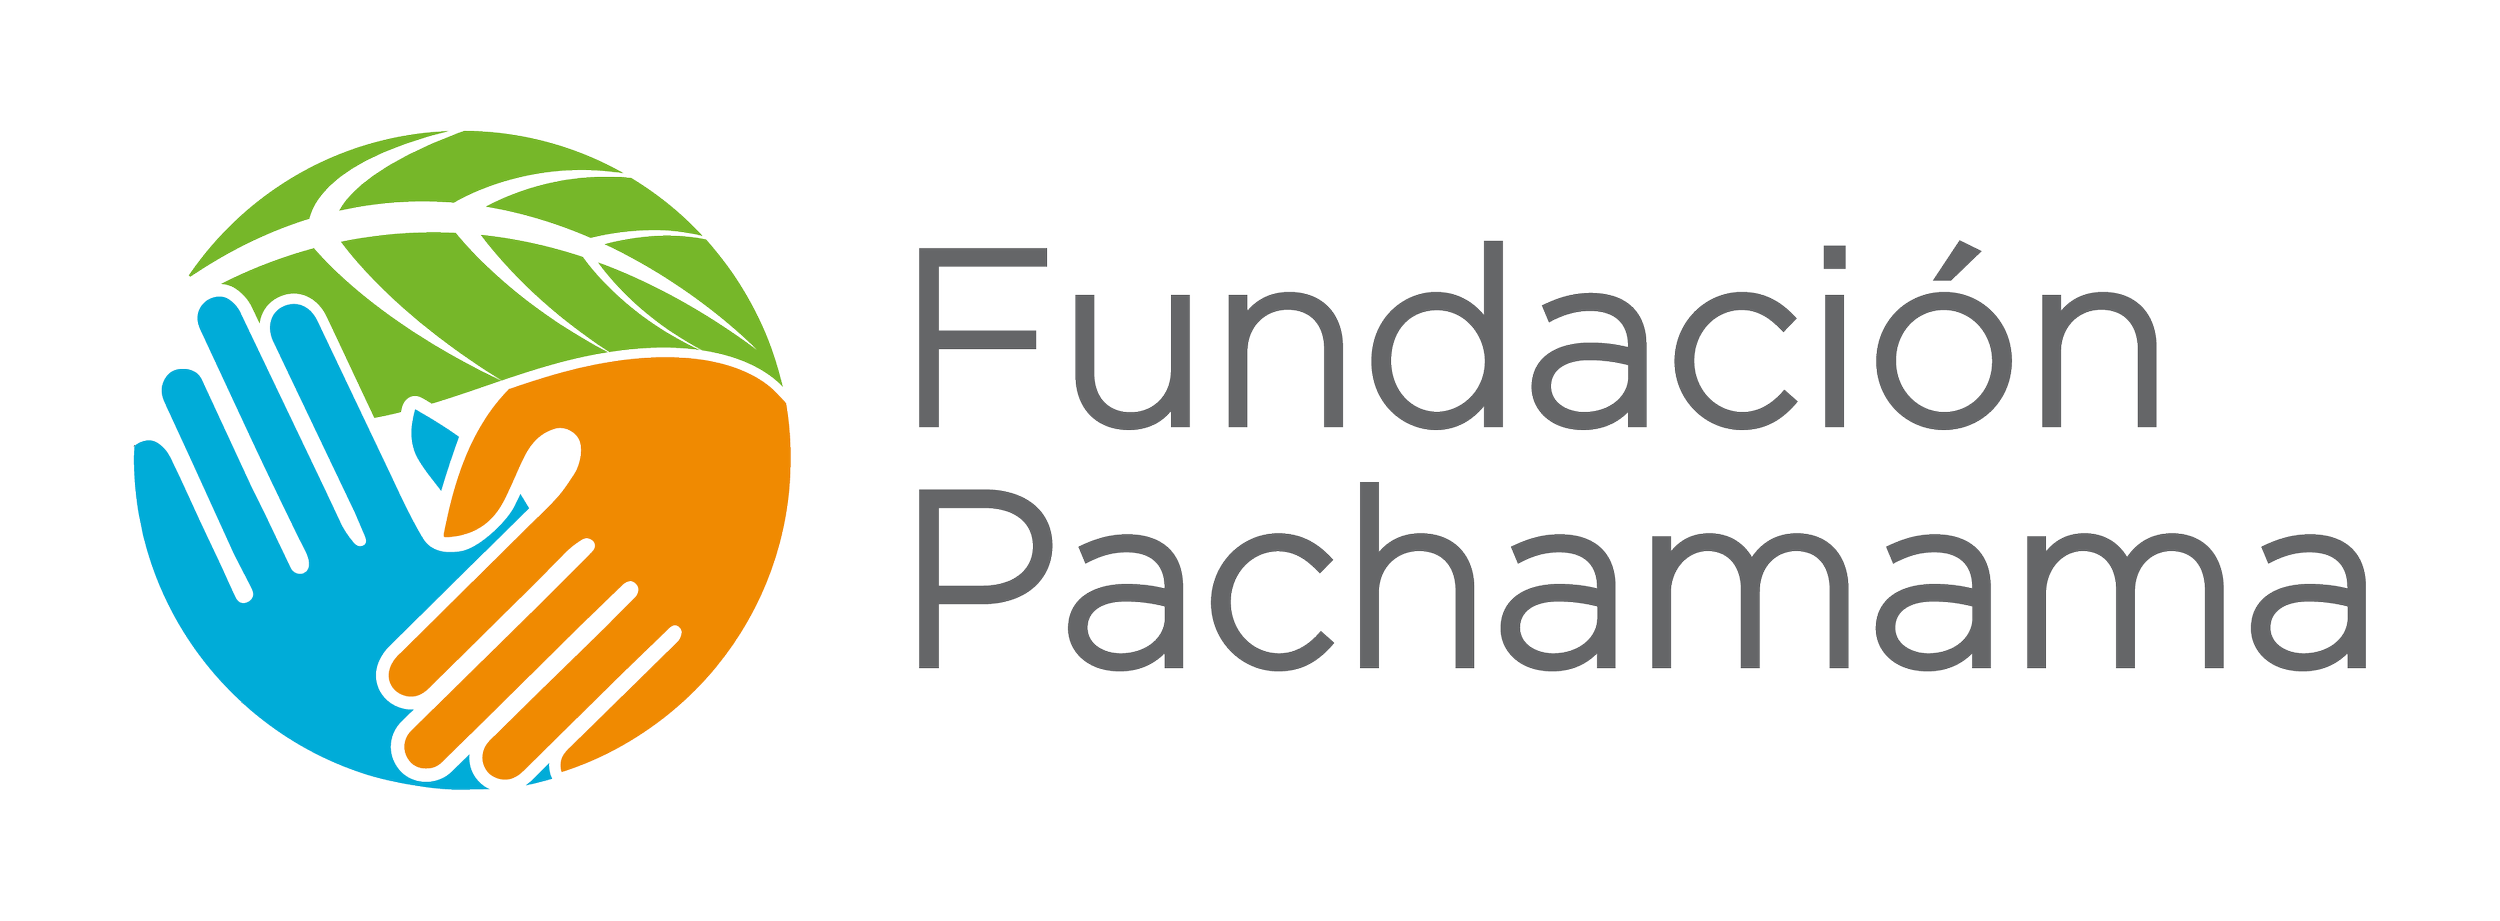 Logo_Fundación Pachamama-01.png